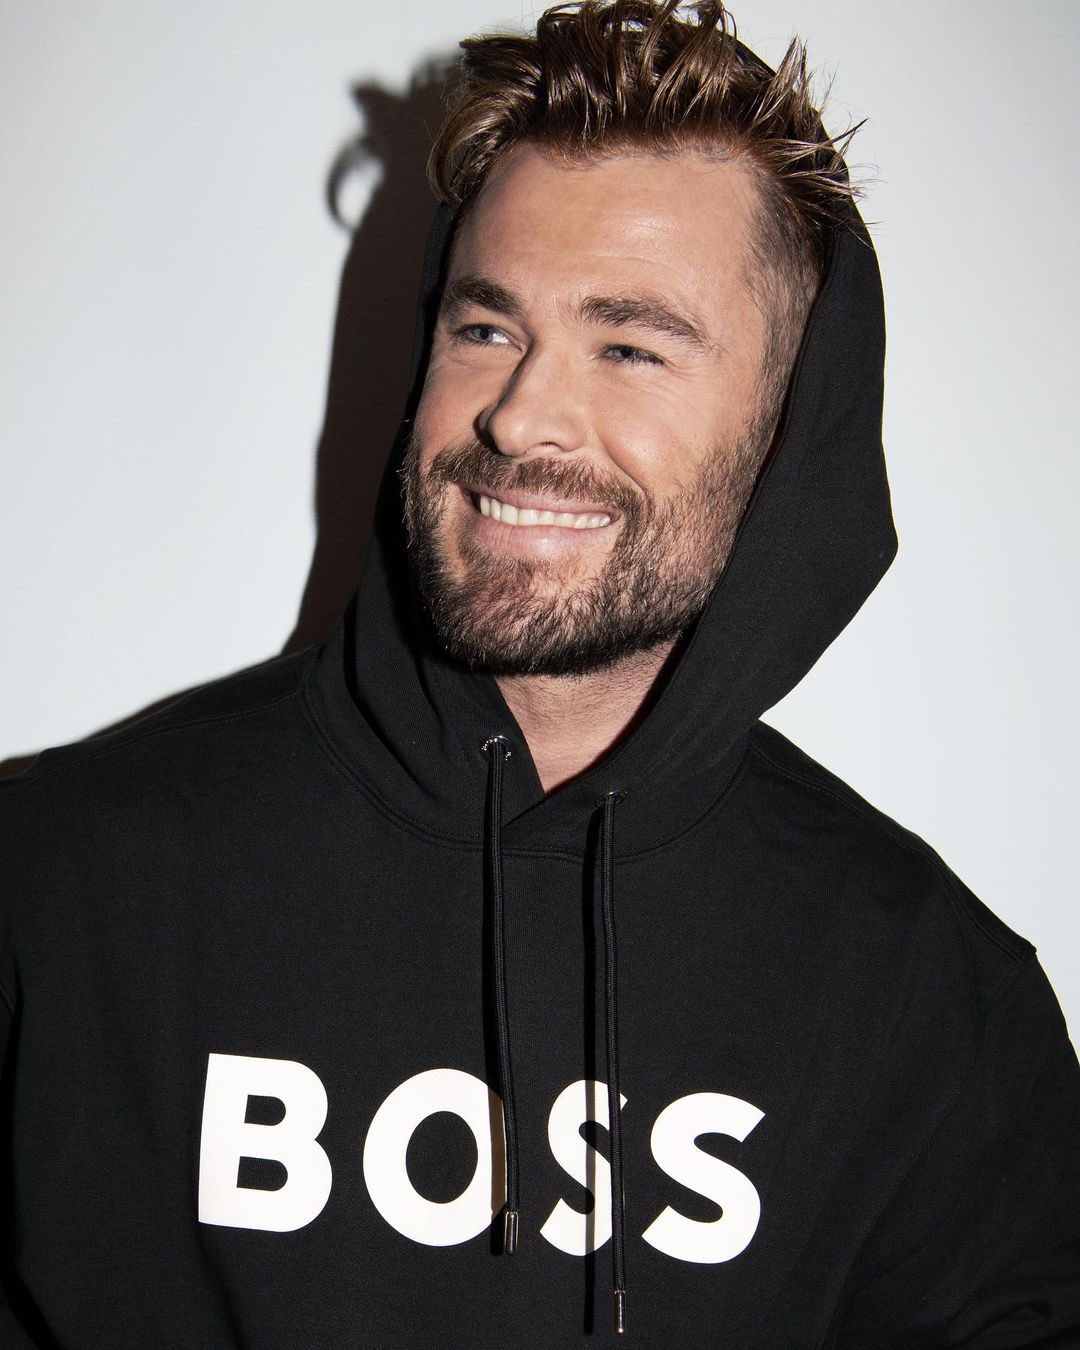 Chris Hemsworth Fan on Twitter: "New. @chrishemsworth for BOSS. “The hoodie  says it all #BeYourOwnBOSS @boss #ad #sponsored” - @chrishemsworth via  Instagram. https://t.co/aPZEYAg087" / Twitter